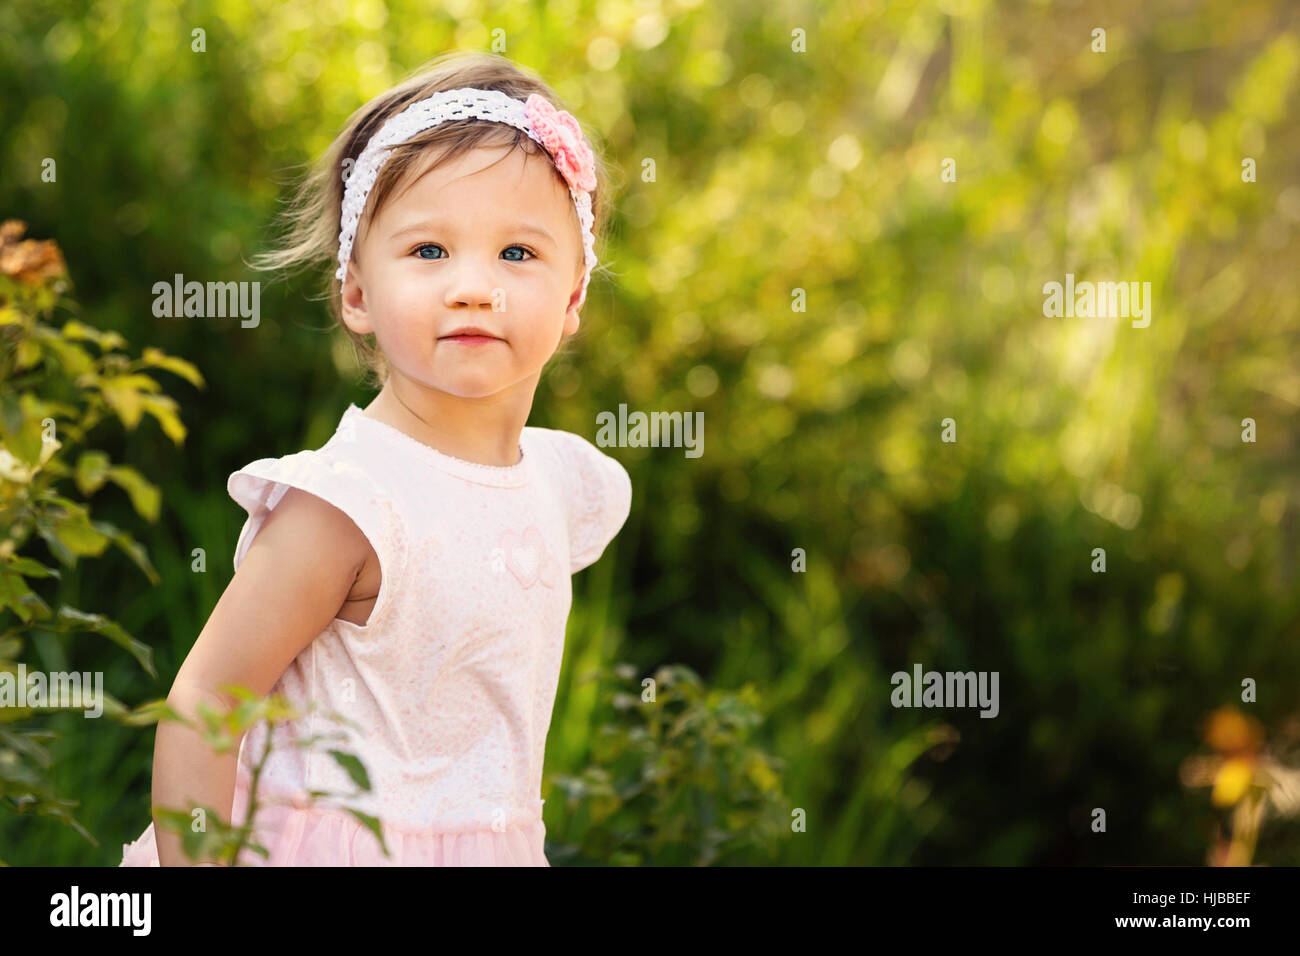 Gorgeous little girl outdoors in green garden Stock Photo - Alamy